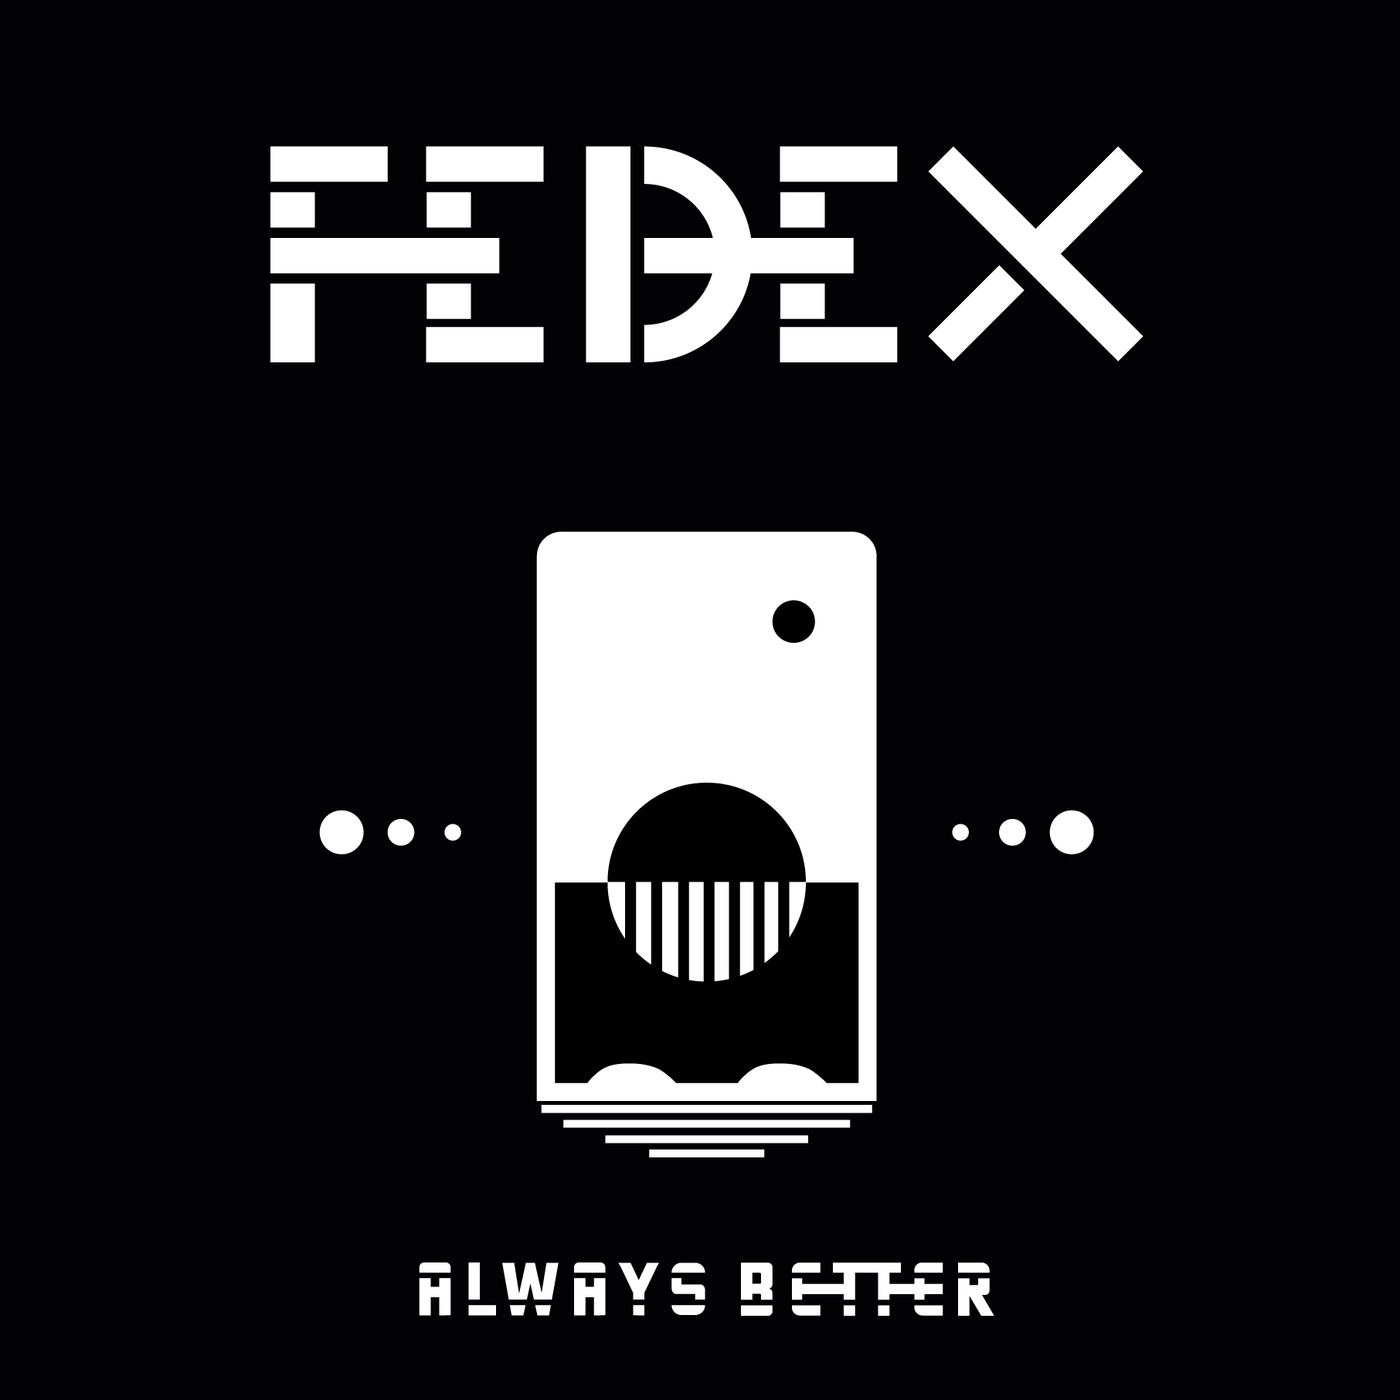 FEDEX Episode 1